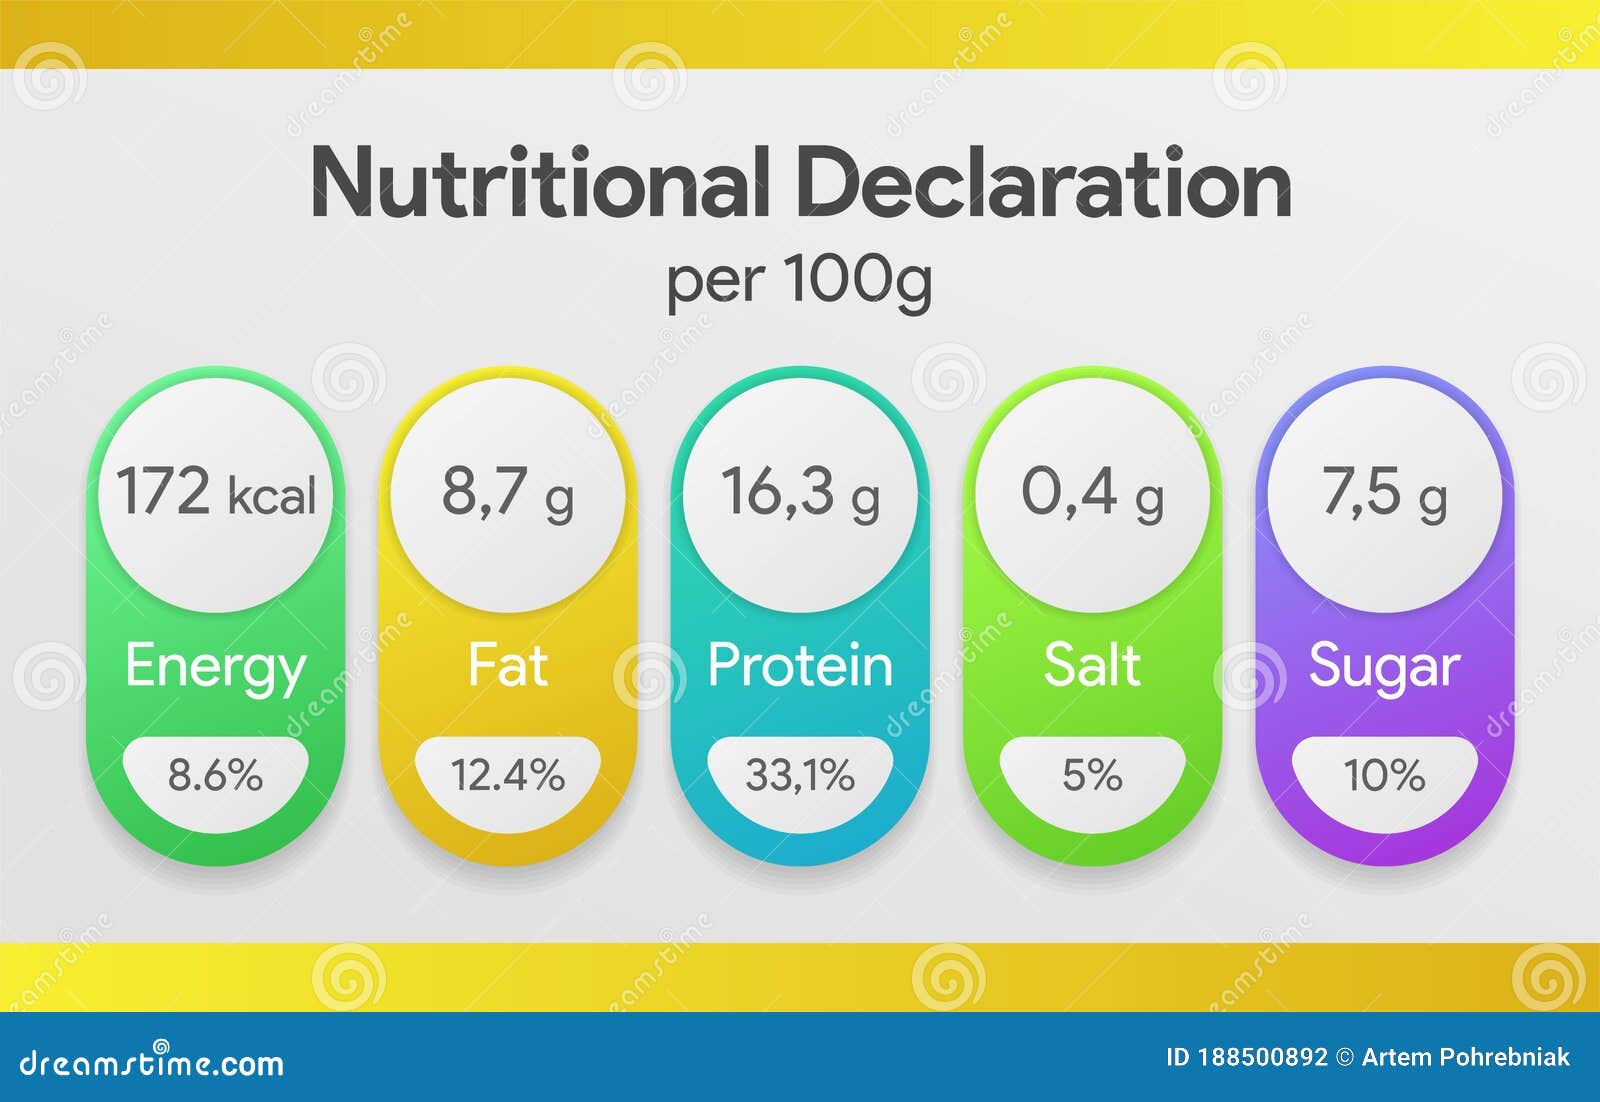 presentation of nutrition declaration